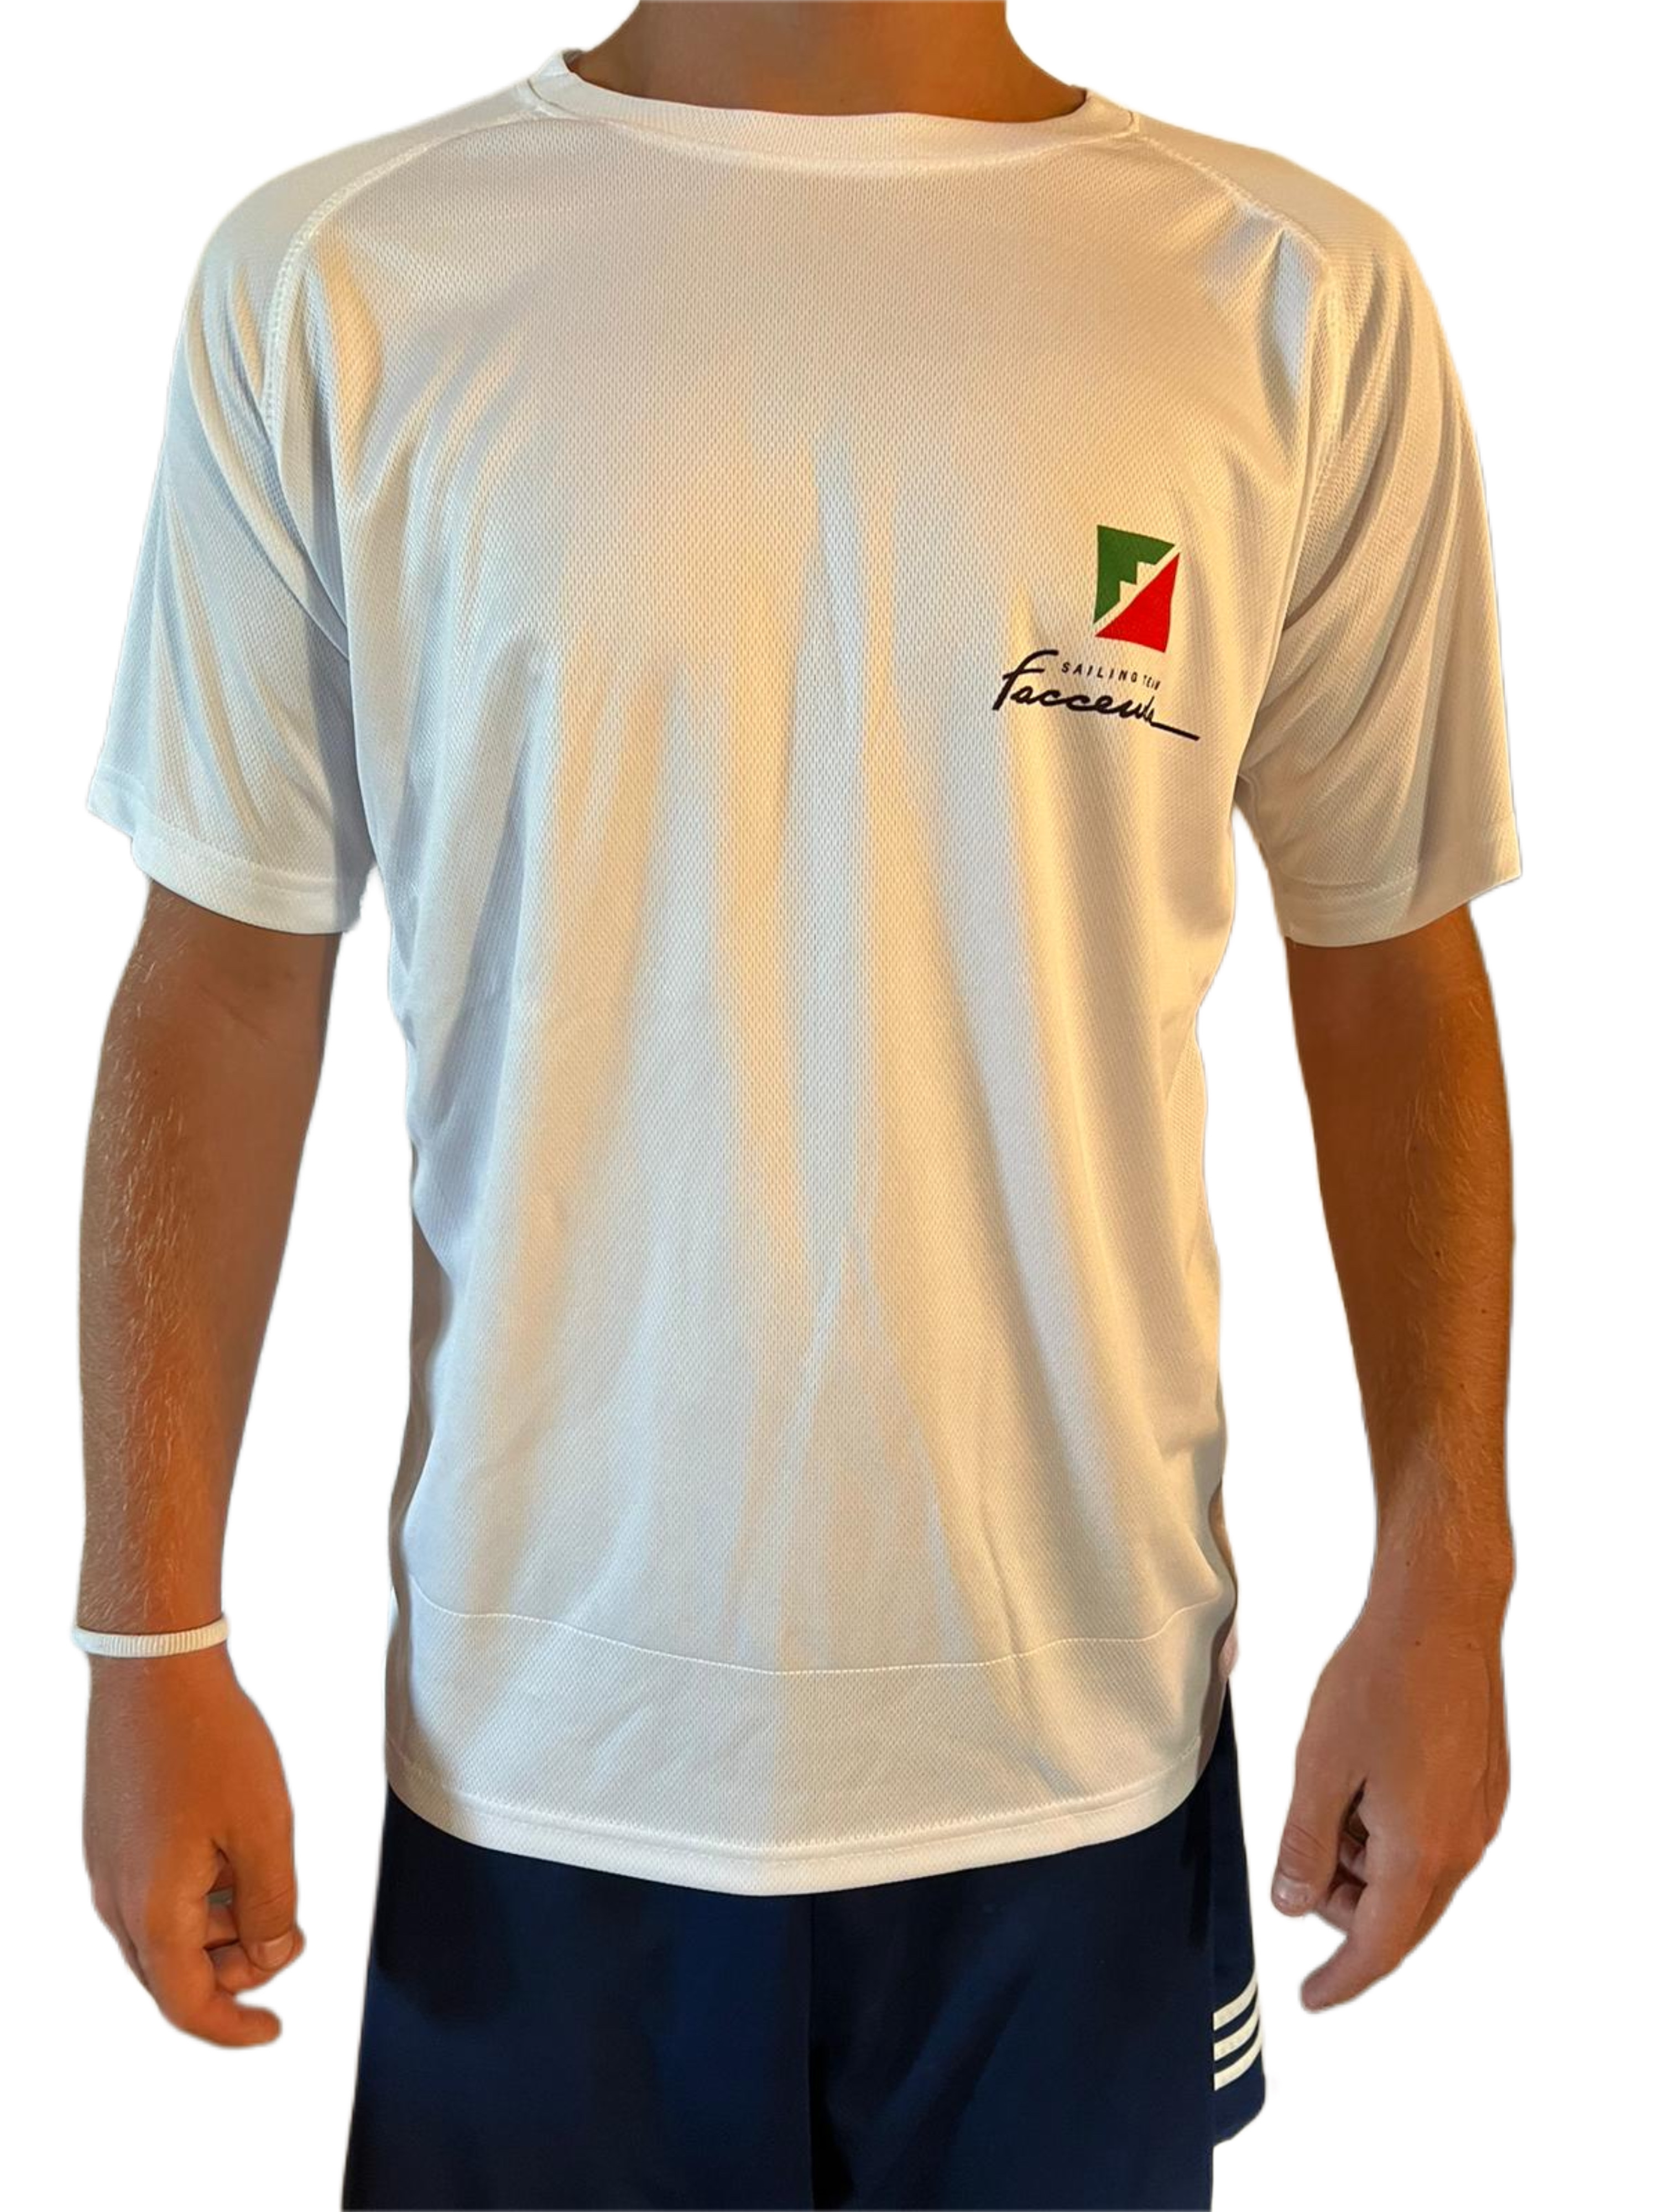 T-shirt tecnica unisex sailing team